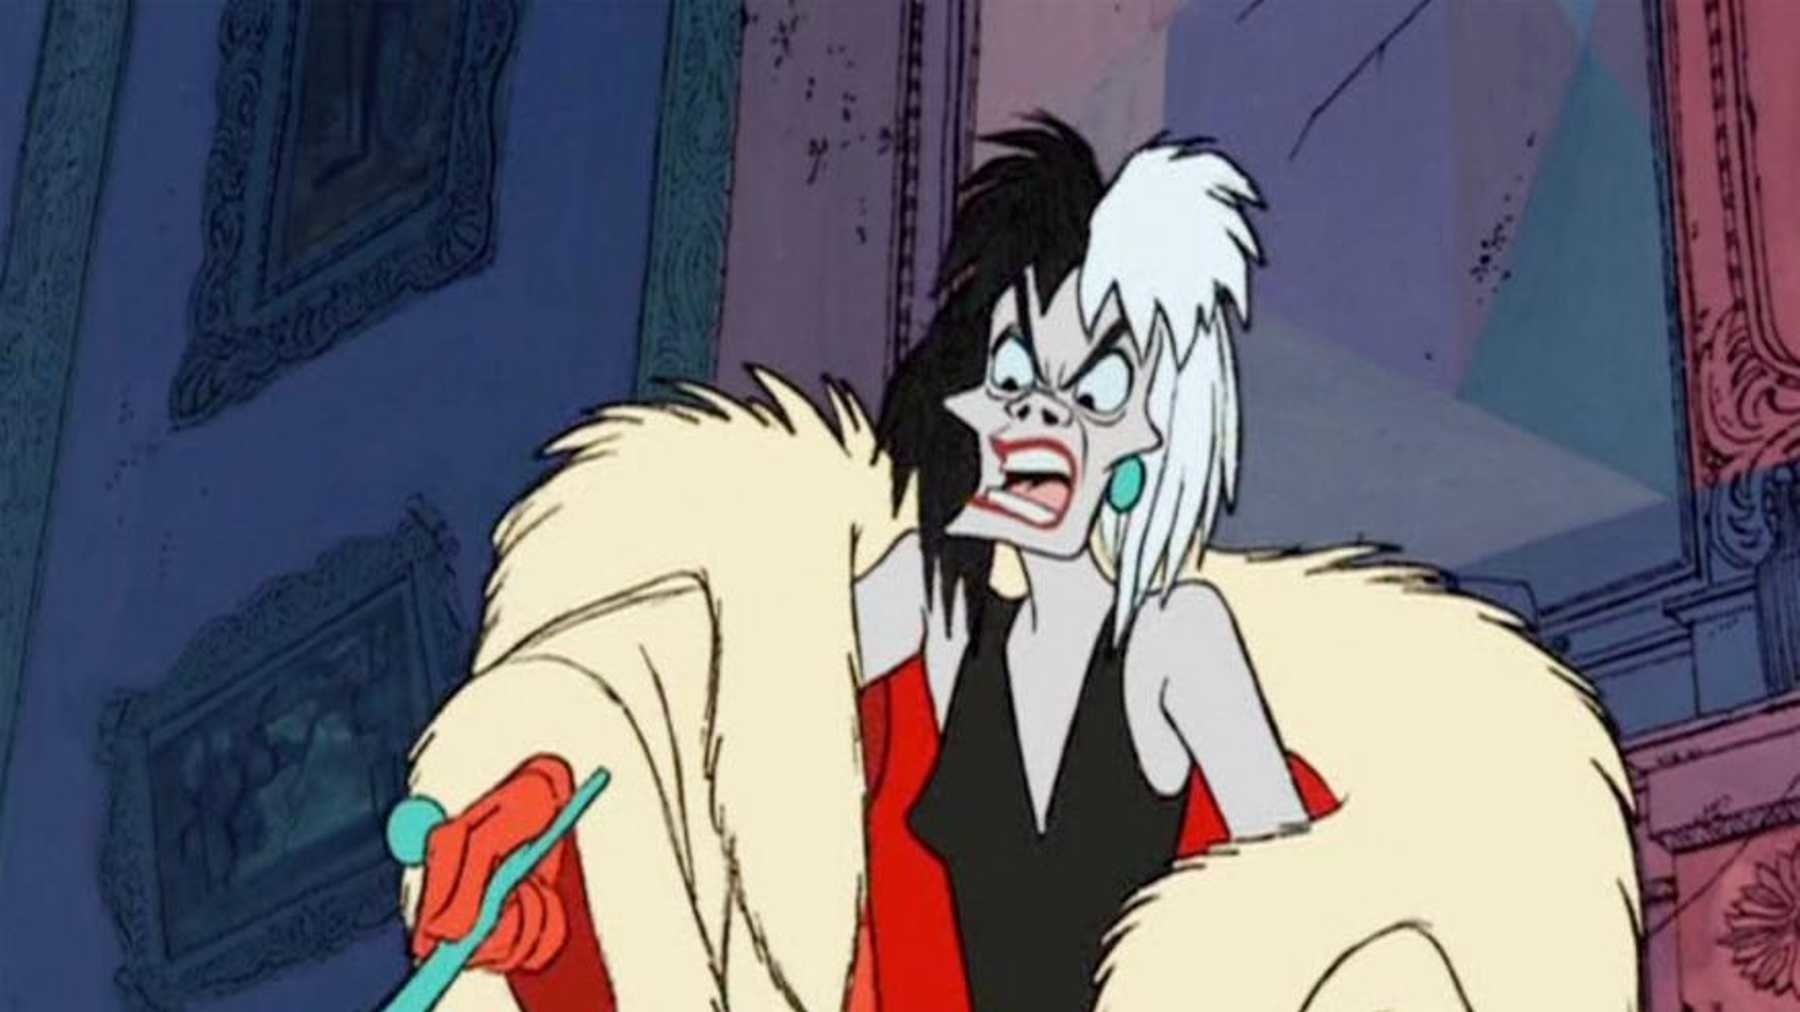 Cruella De Vill, a scrawny woman in a fur coat, points her cigarette holder at something offscreen